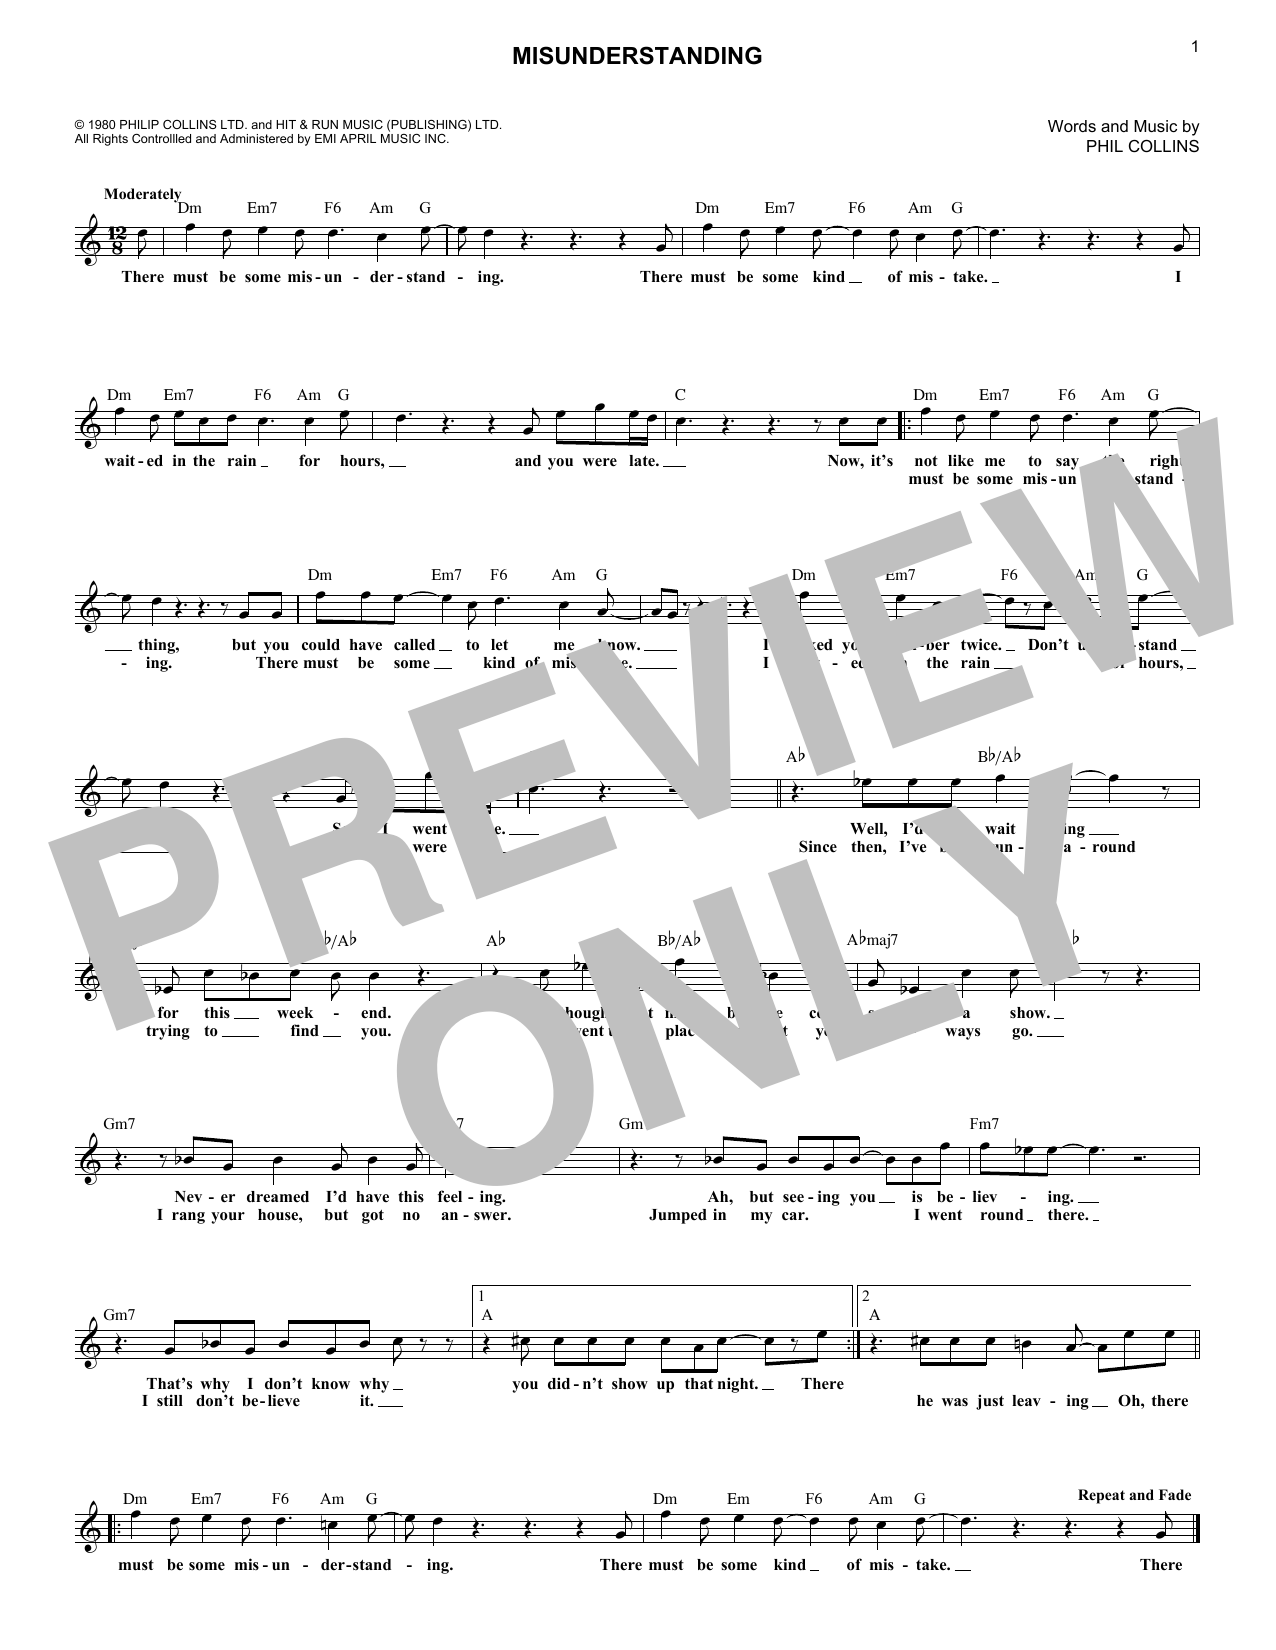 Genesis Misunderstanding Sheet Music Notes & Chords for Melody Line, Lyrics & Chords - Download or Print PDF